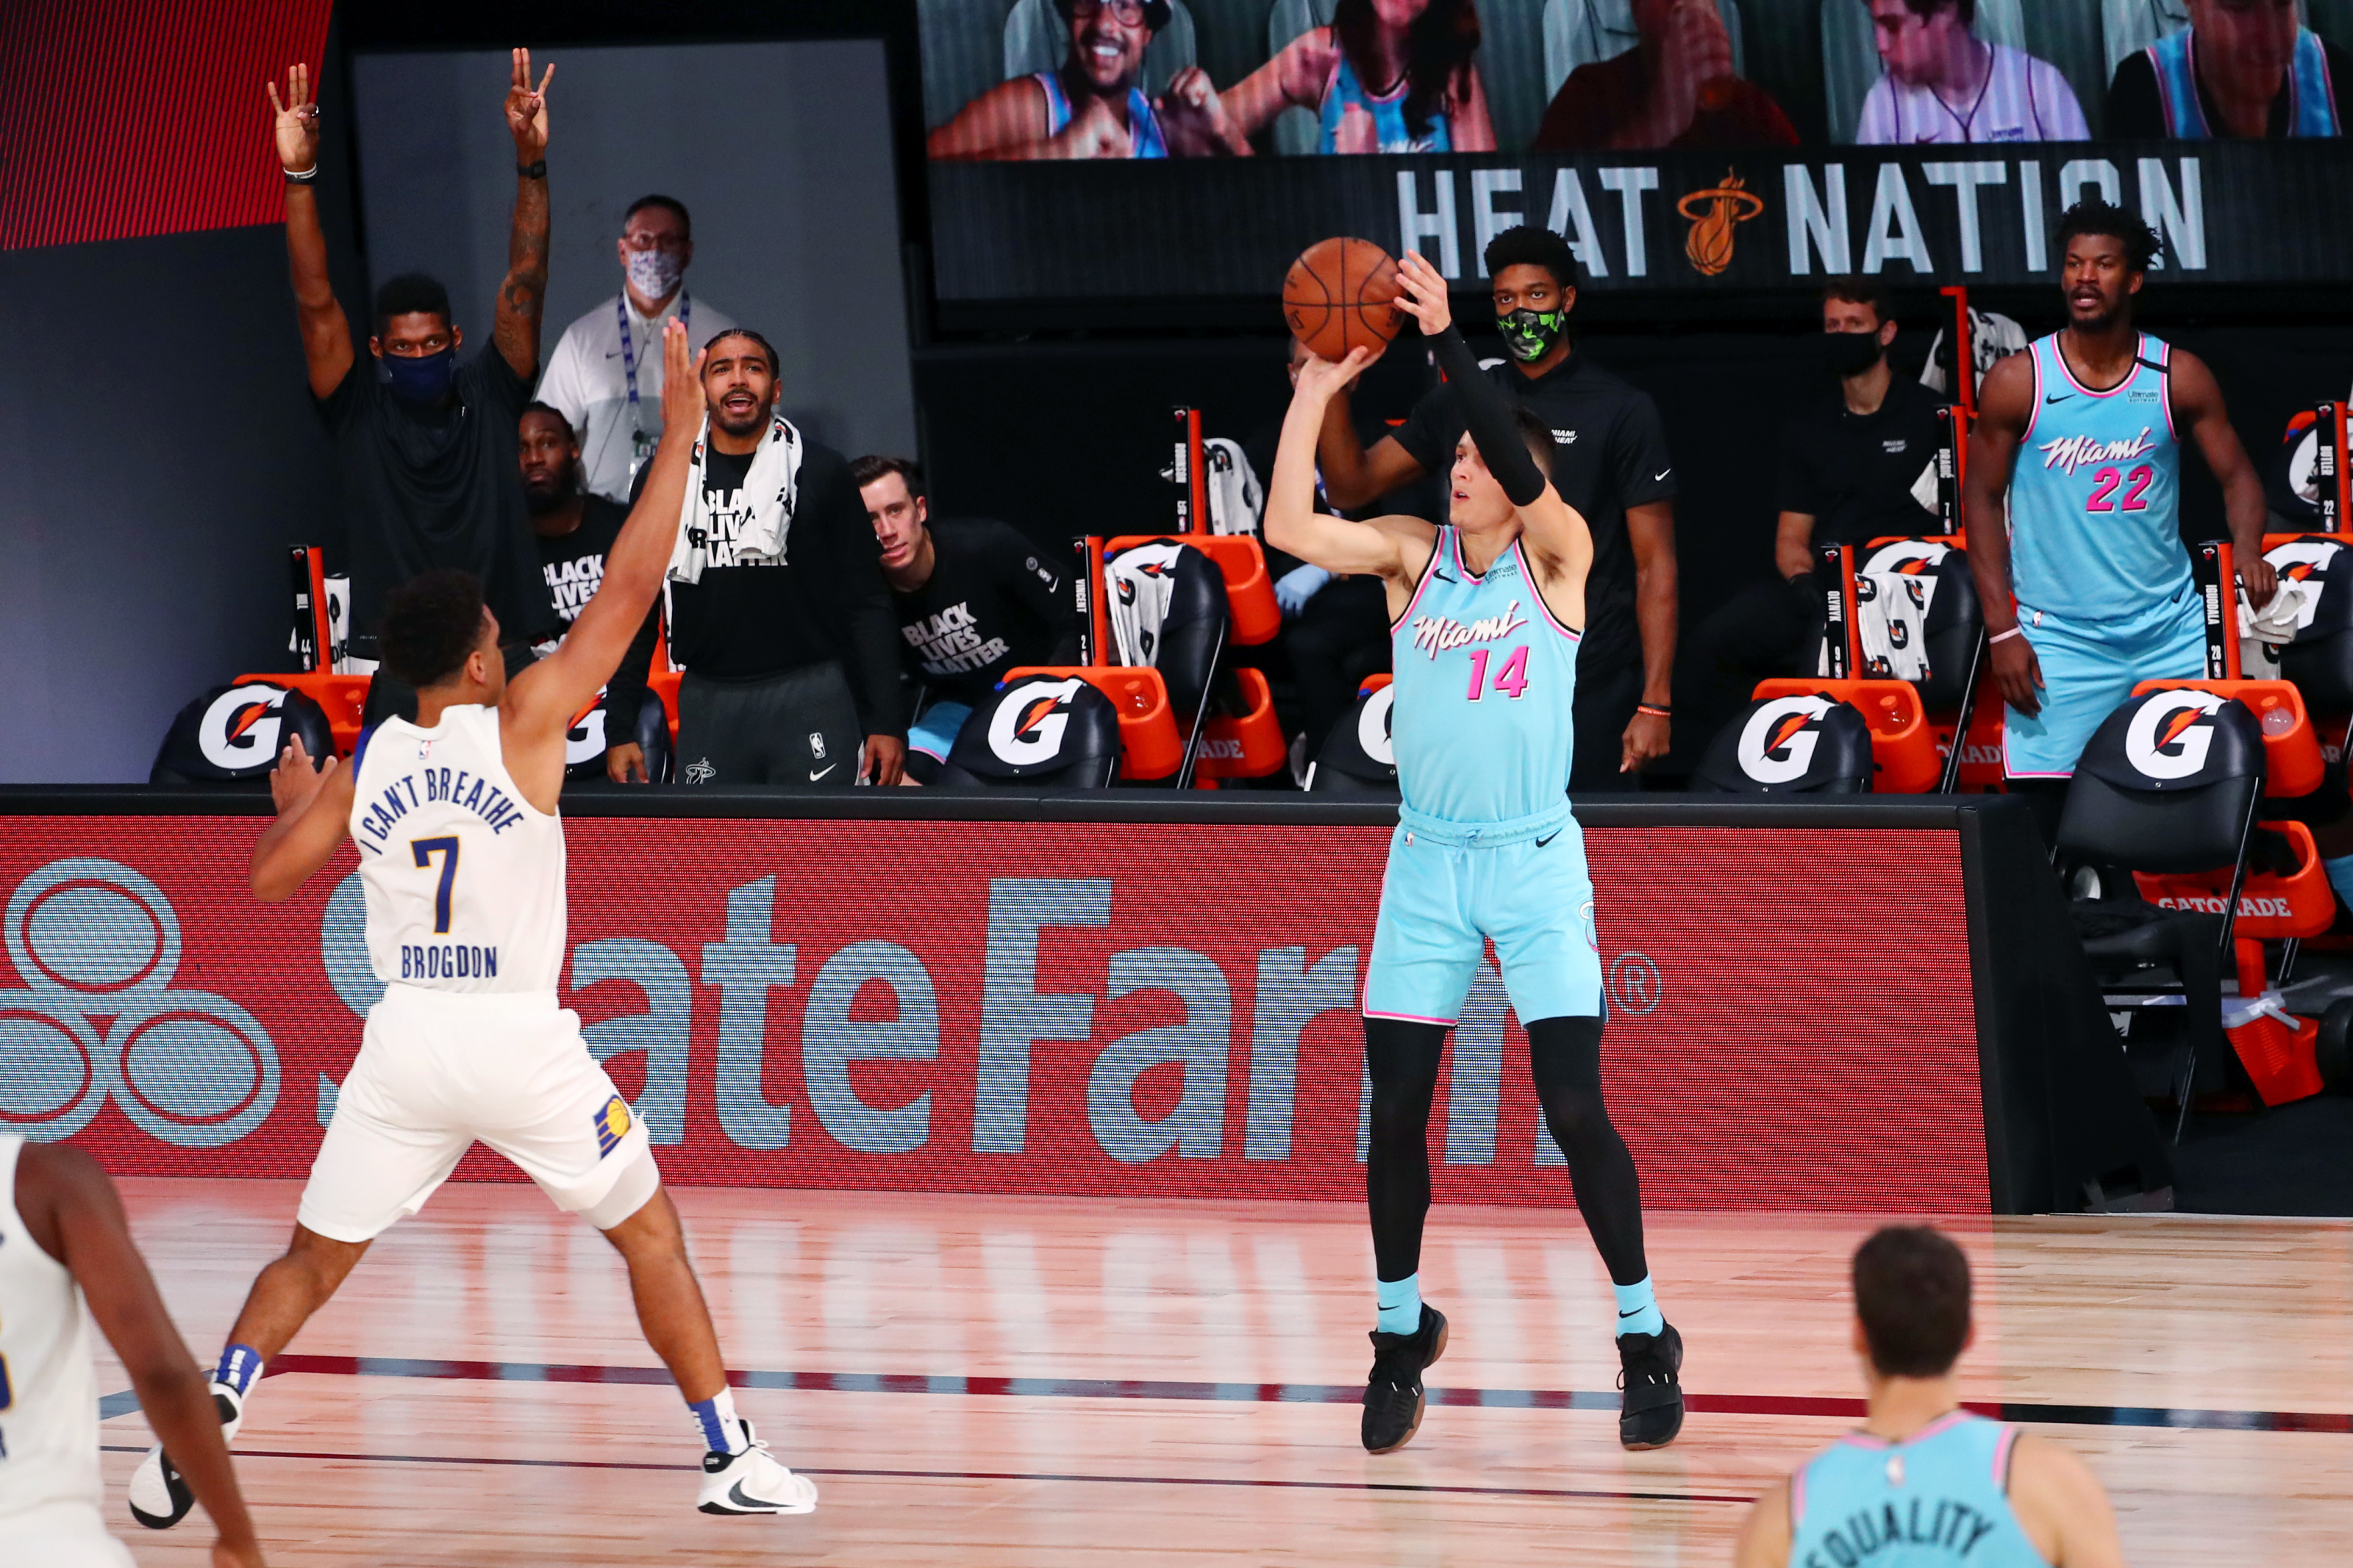 Miami Heat picks Tyler Herro at No. 13 in NBA draft